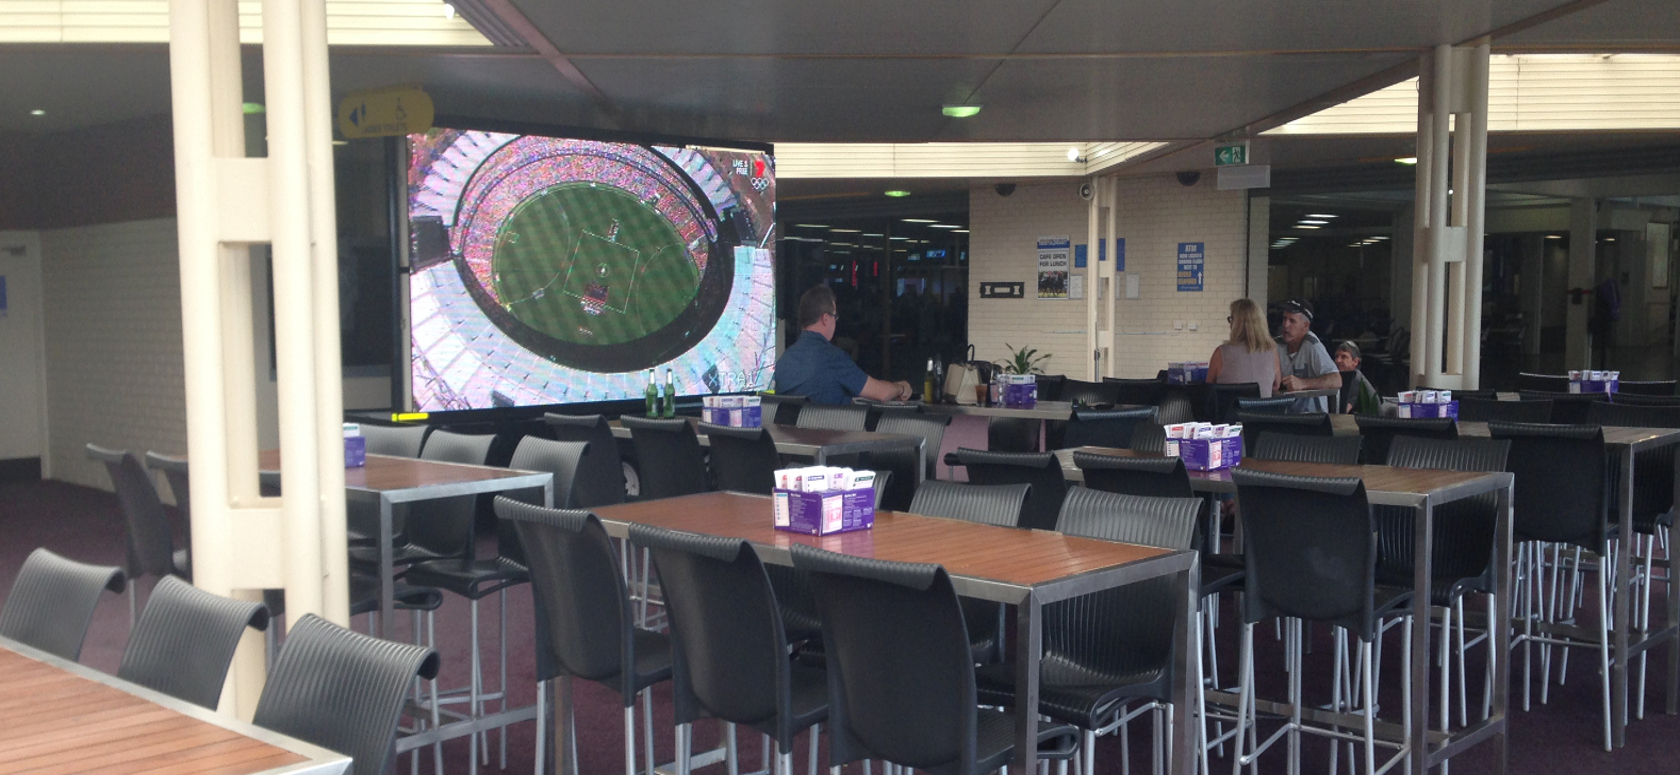 Football on a Mega Screen inside a pub